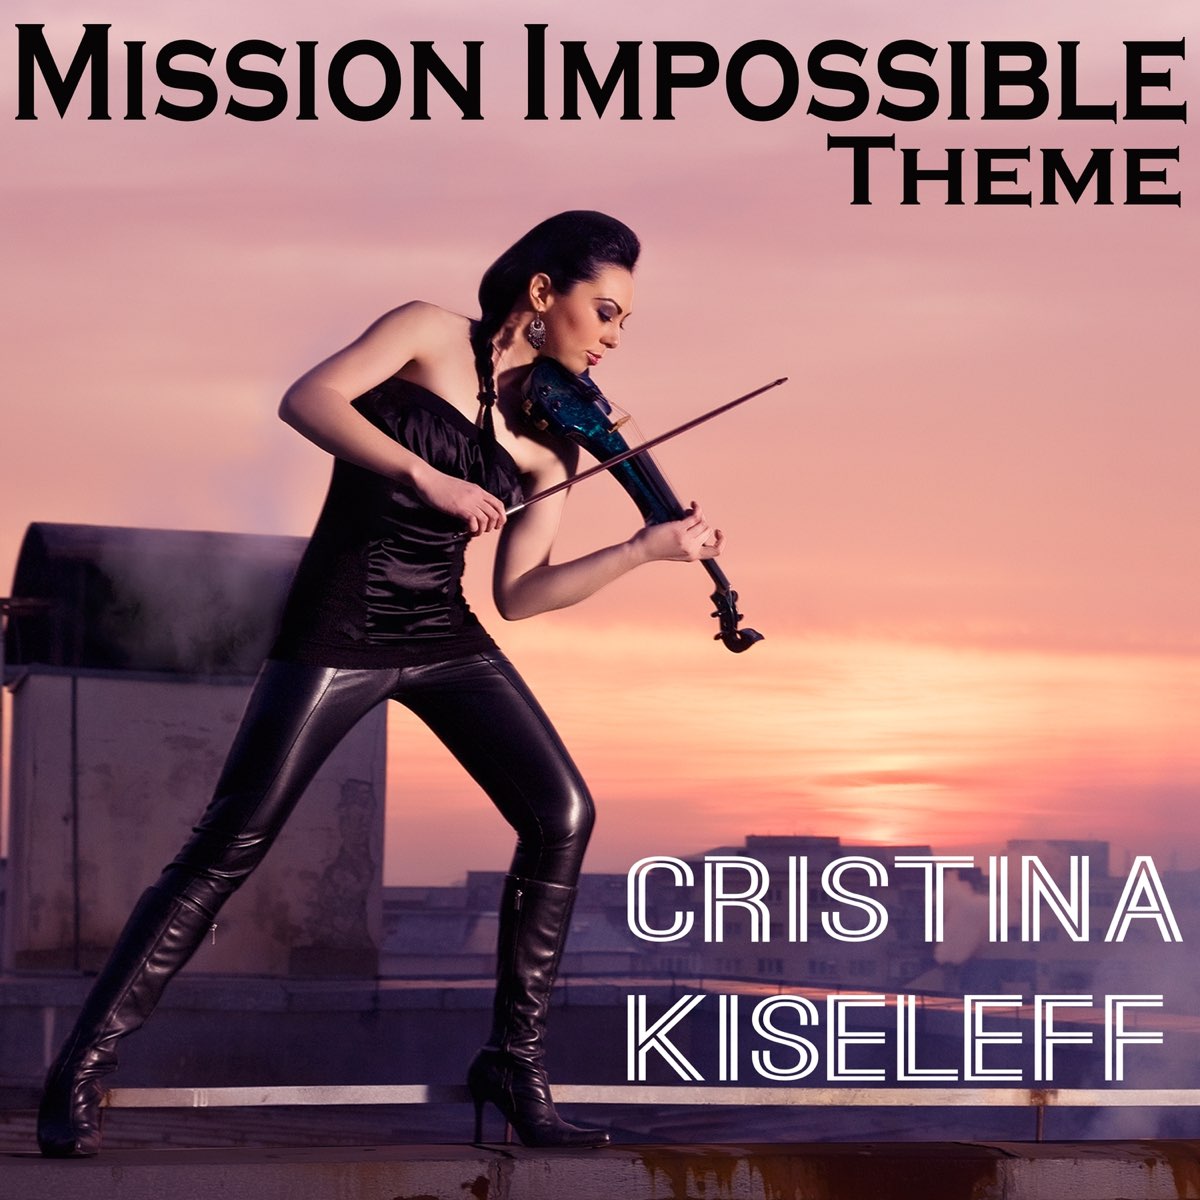 Mission Impossible Theme - Single by Cristina Kiseleff on Apple Music